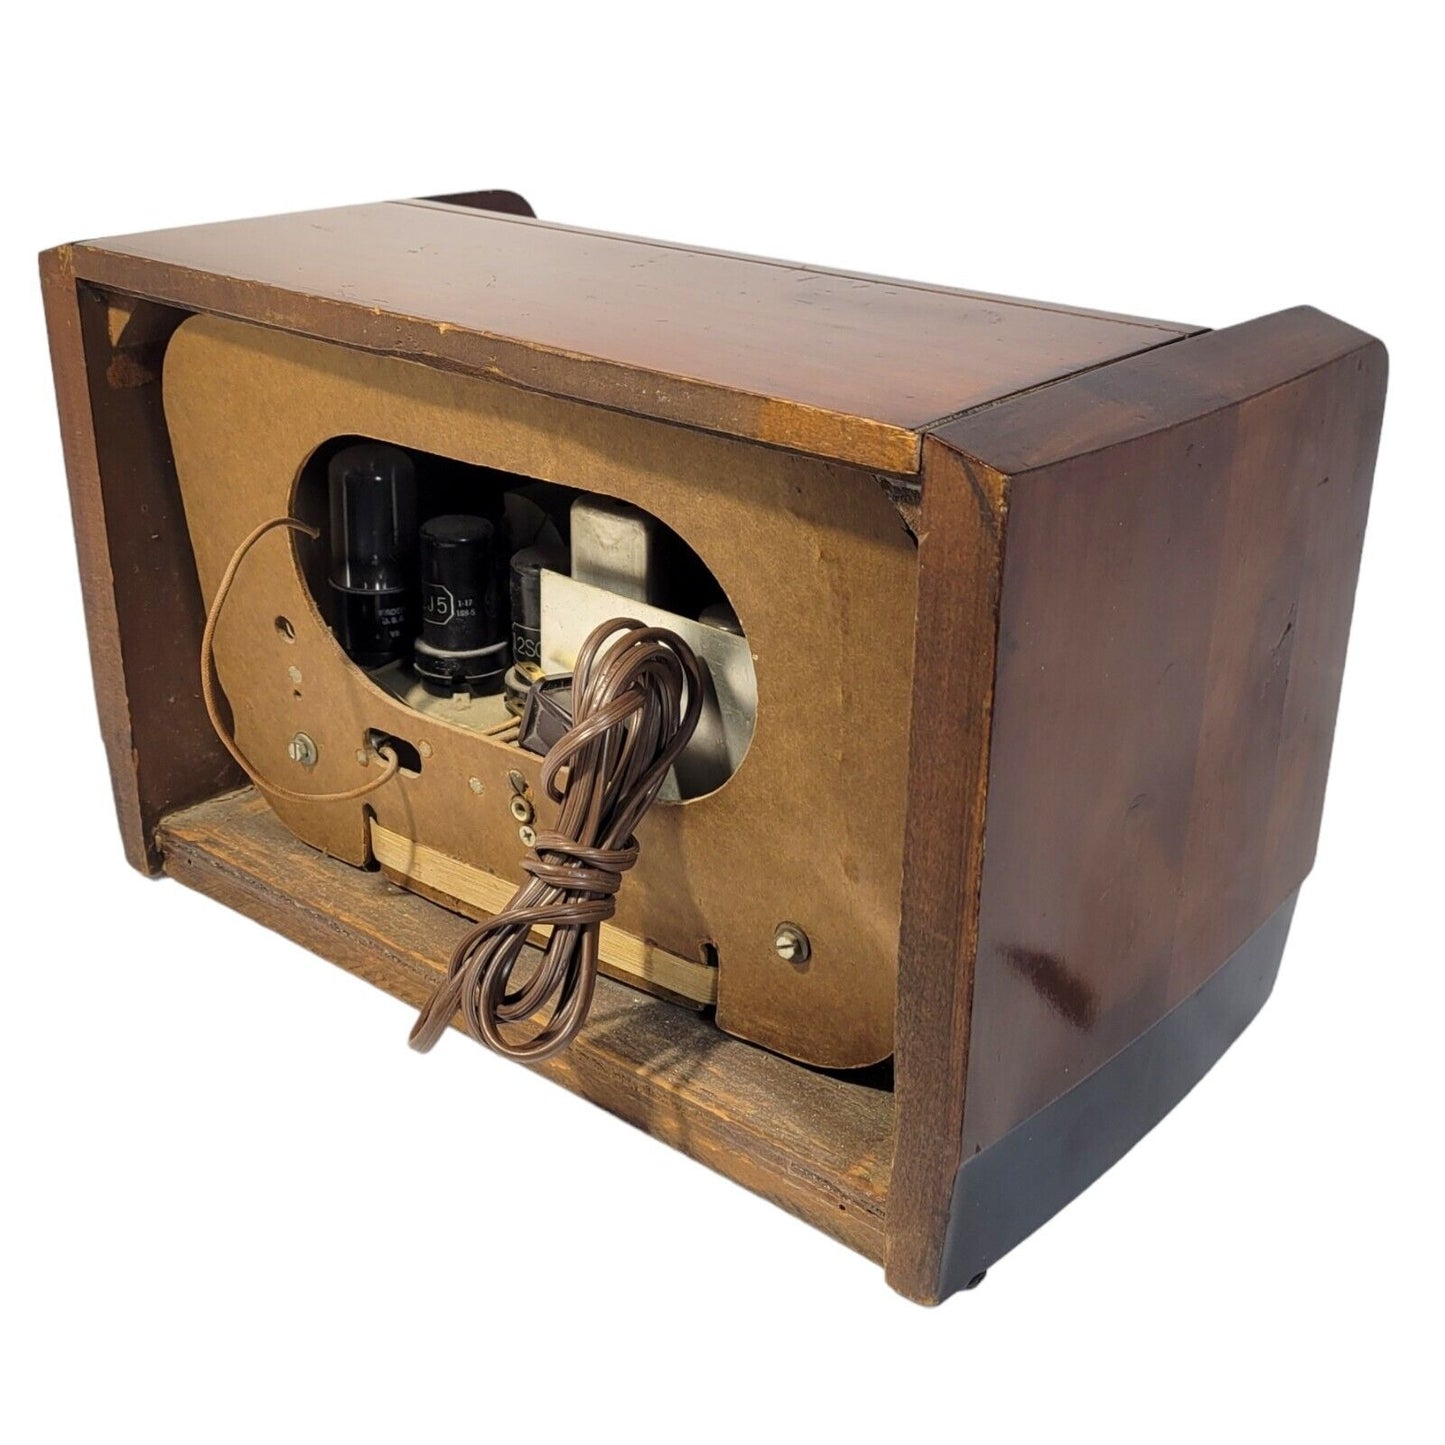 Vintage Radiola 61-3 AM Radio 1946/1947 Wood Cabinet Working